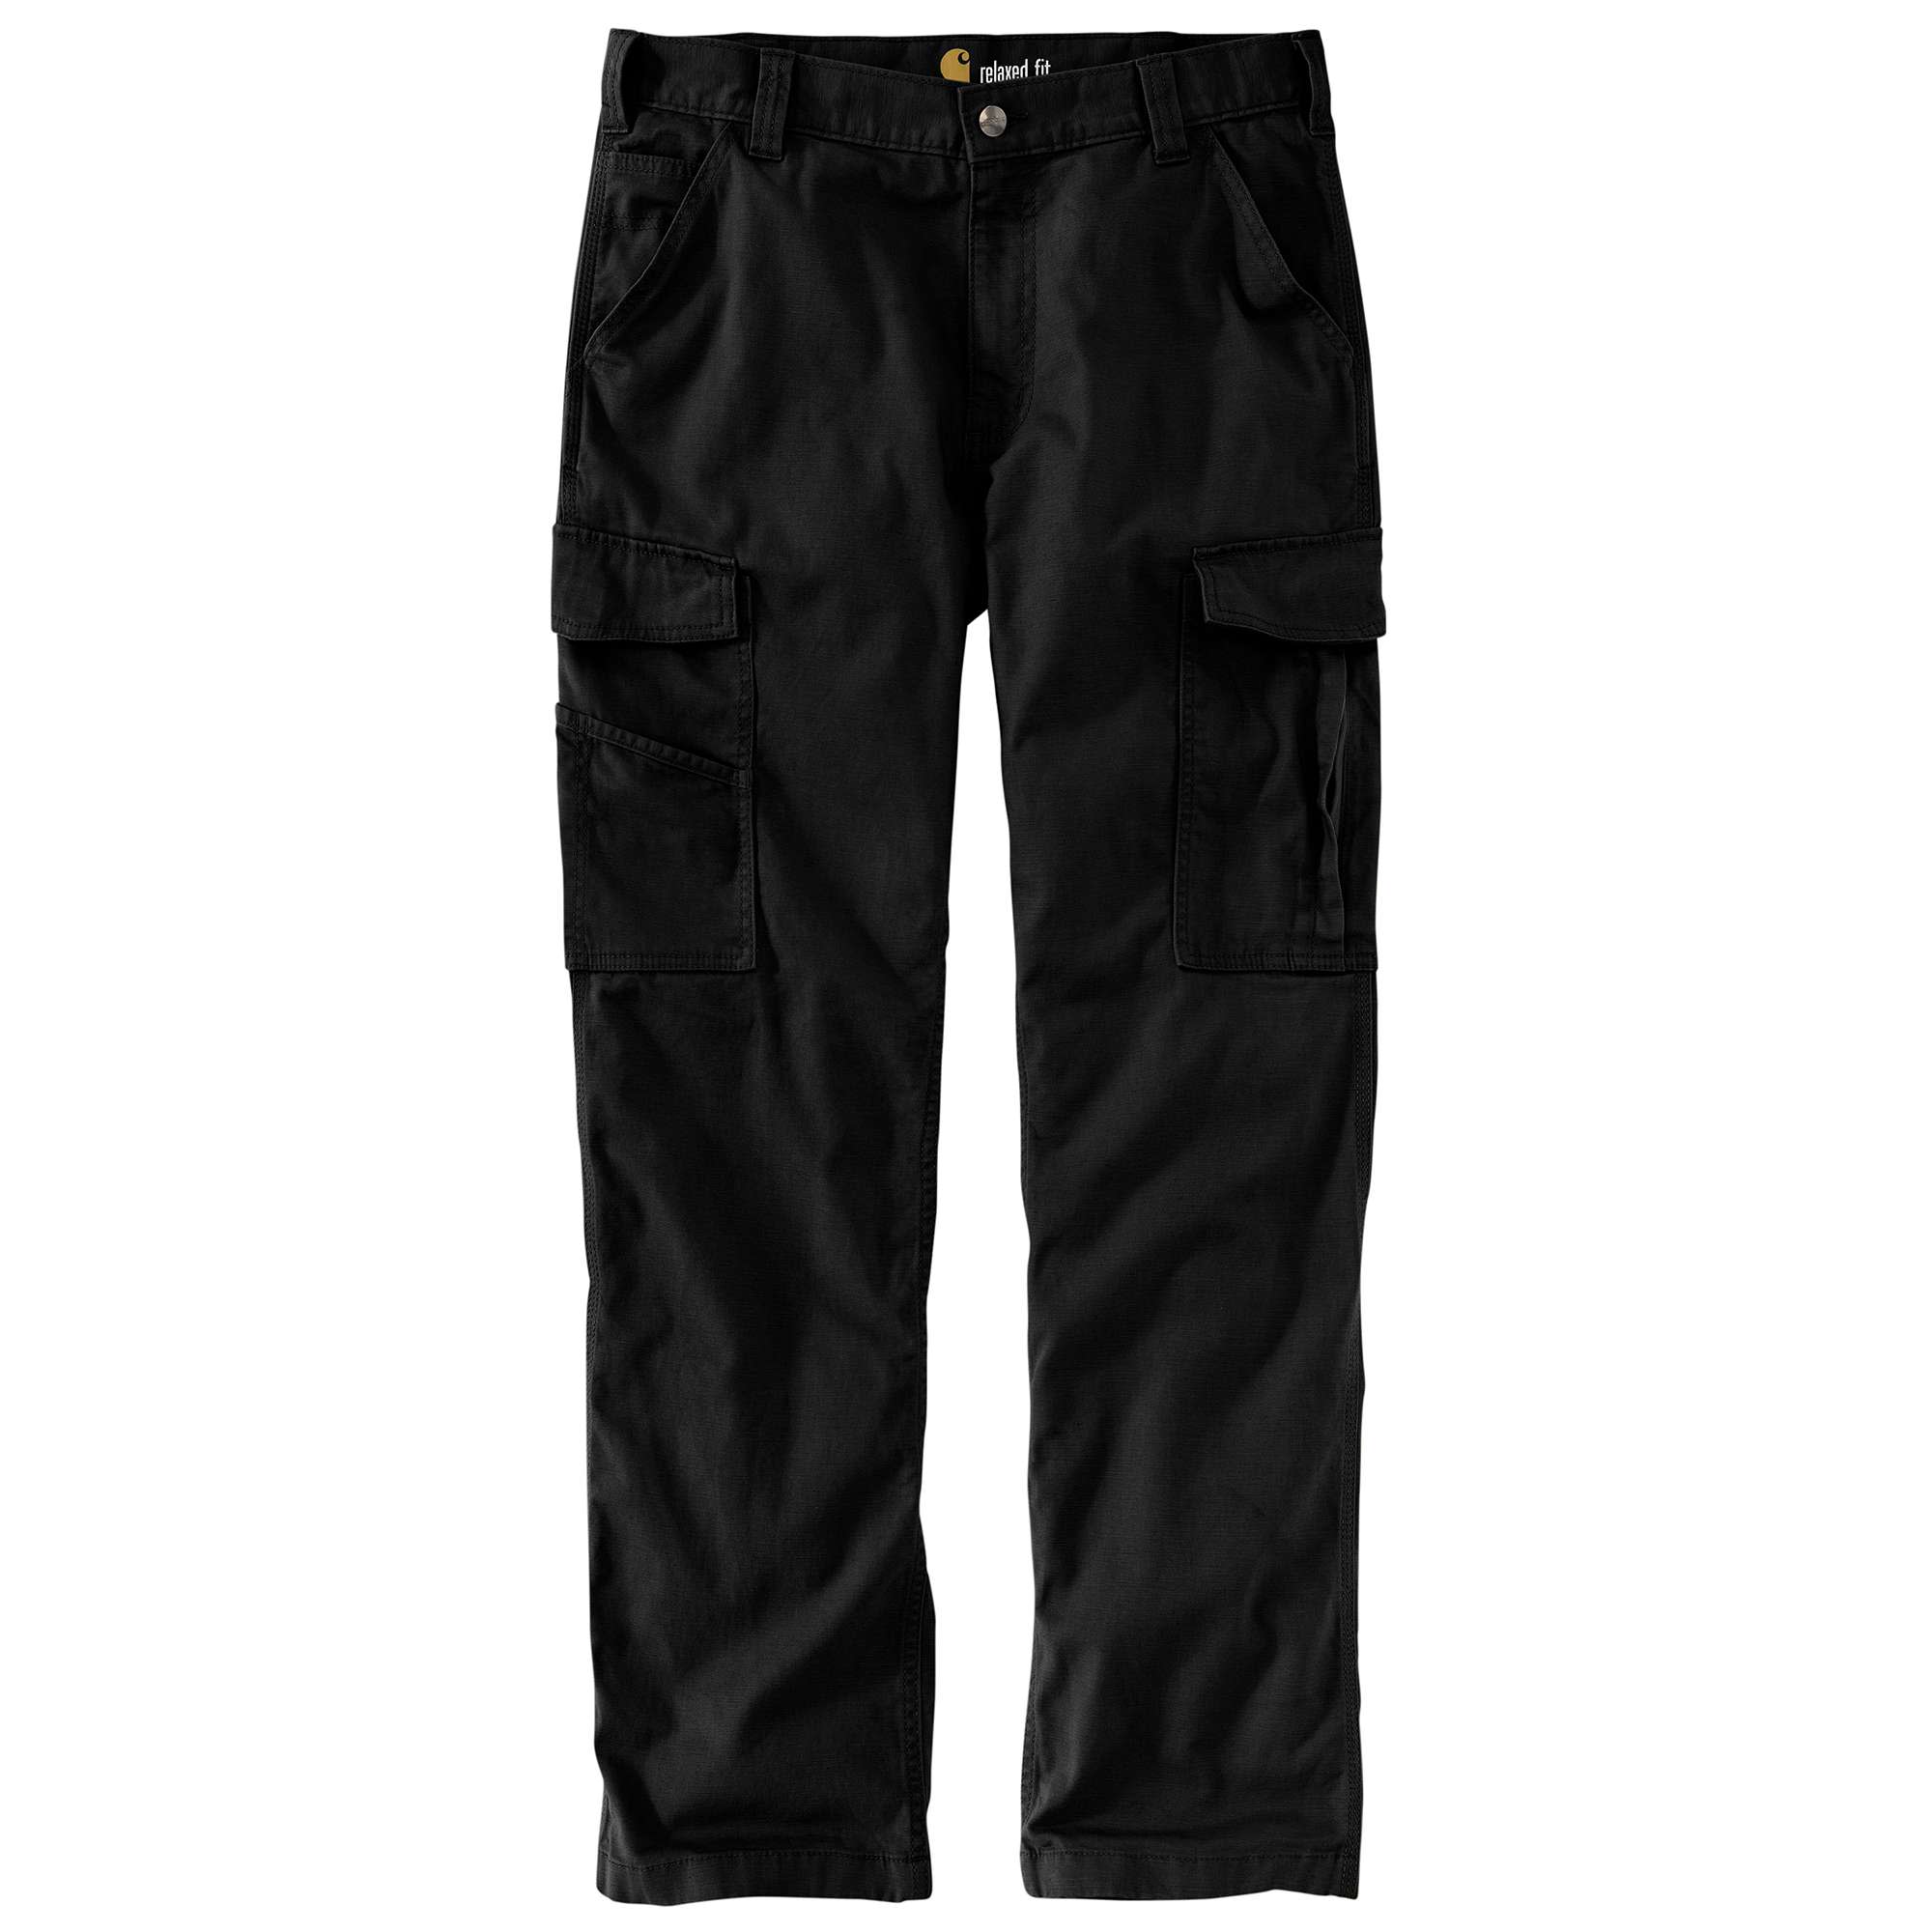 Relaxed Fit Cargo trousers | Dark Grey | Jack & Jones®